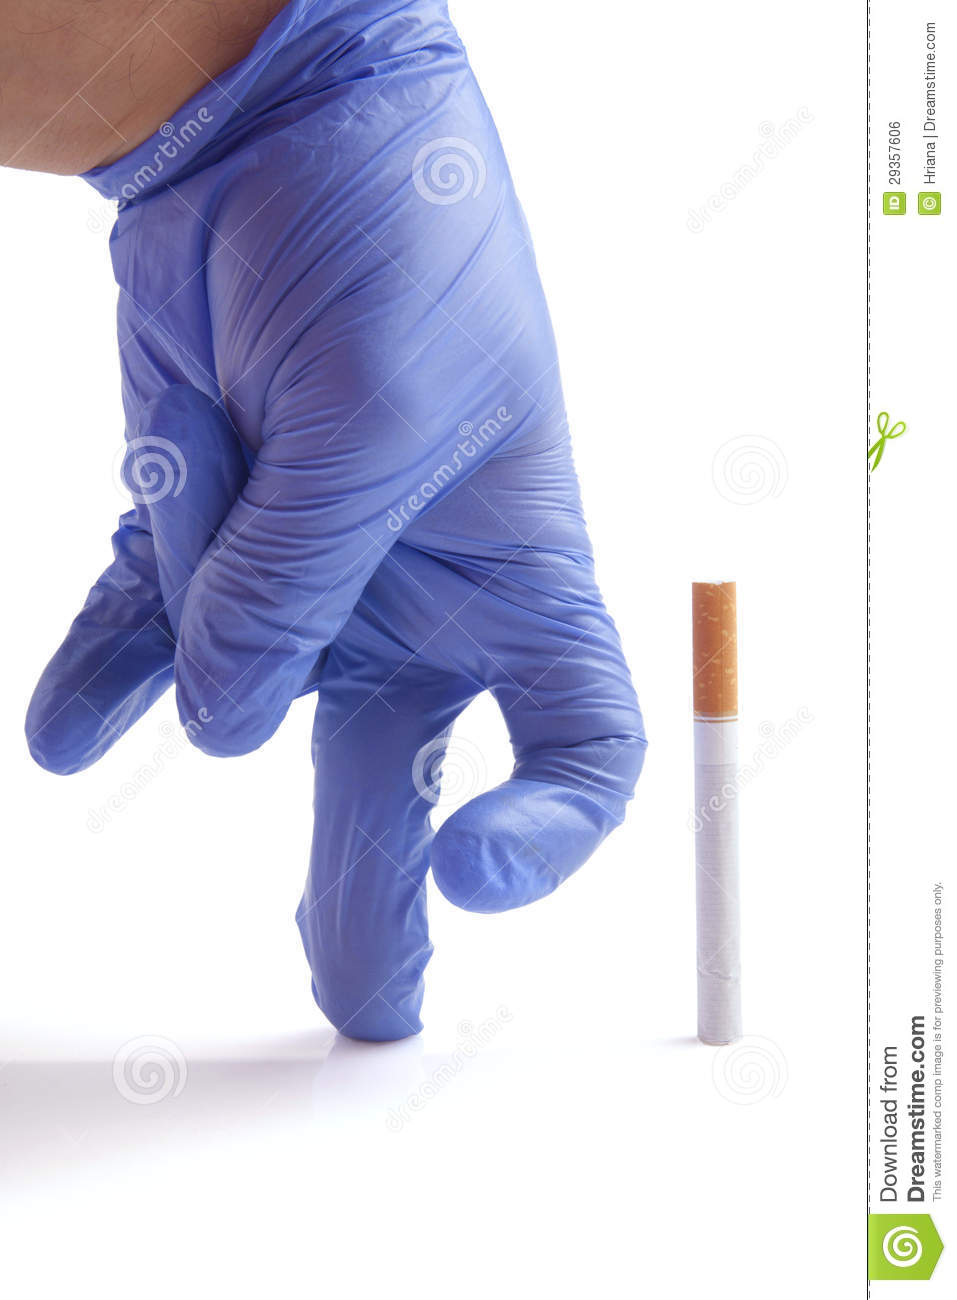 Gloved Hand Throwing Cigarette Quit Smoking Metaphor Royalty Free